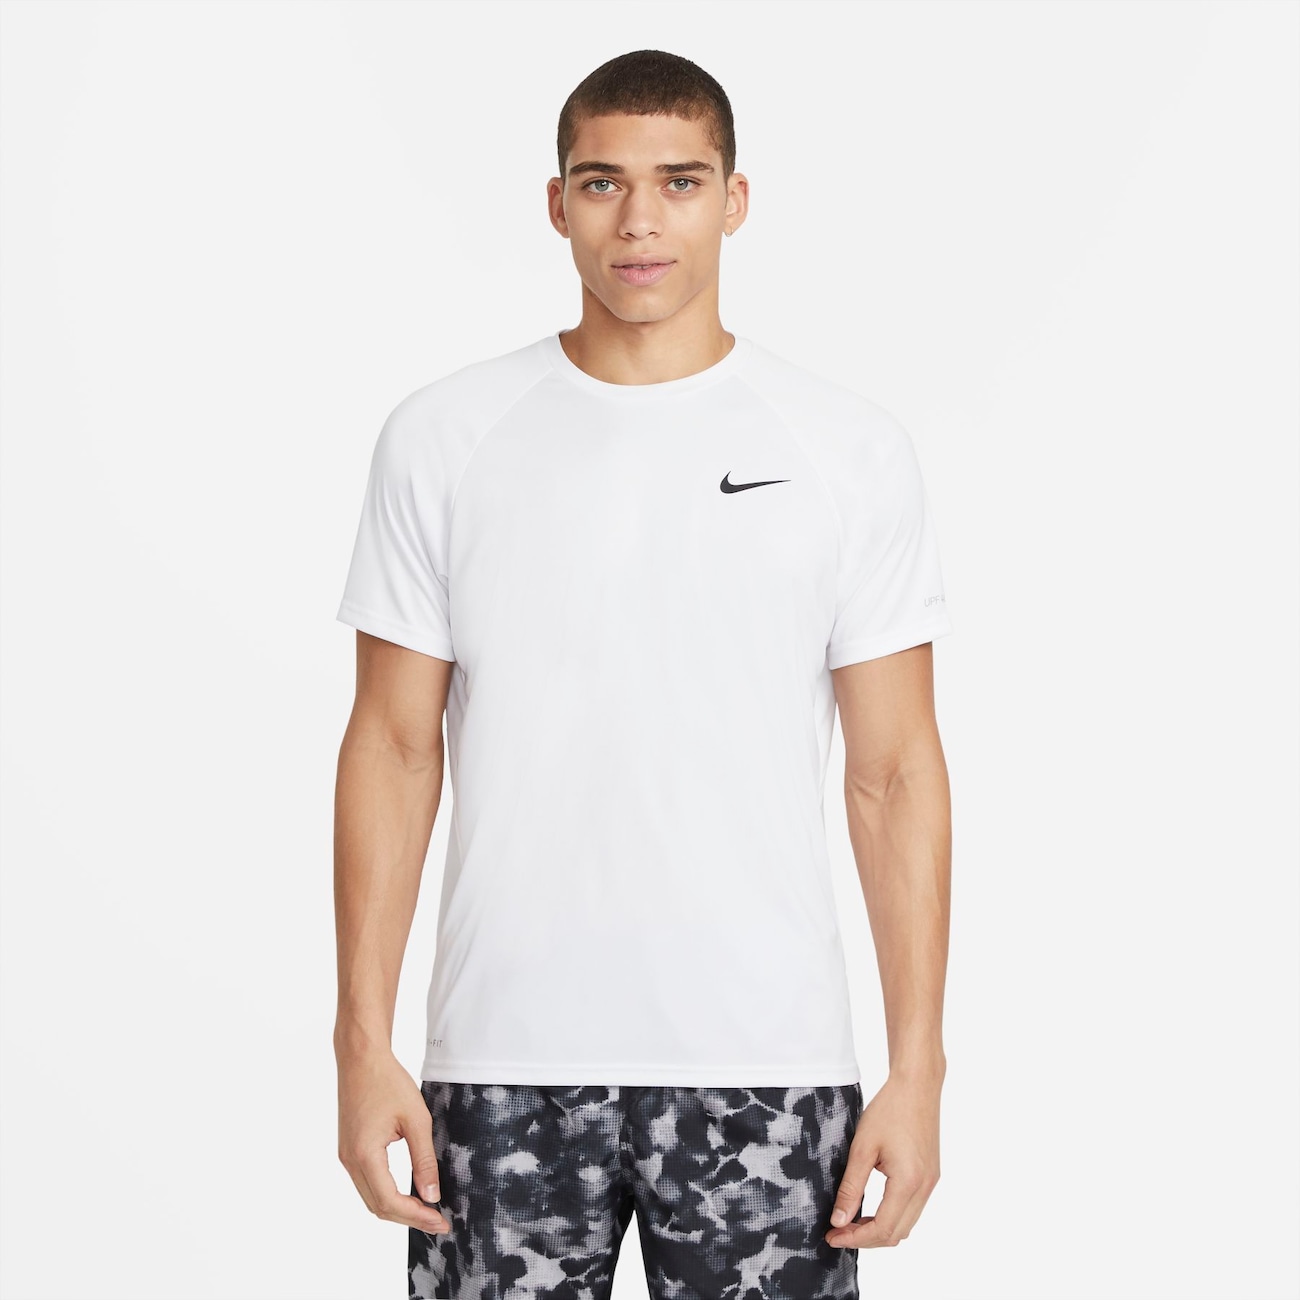 Camiseta Nike Essential Hydro Masculina - Foto 1